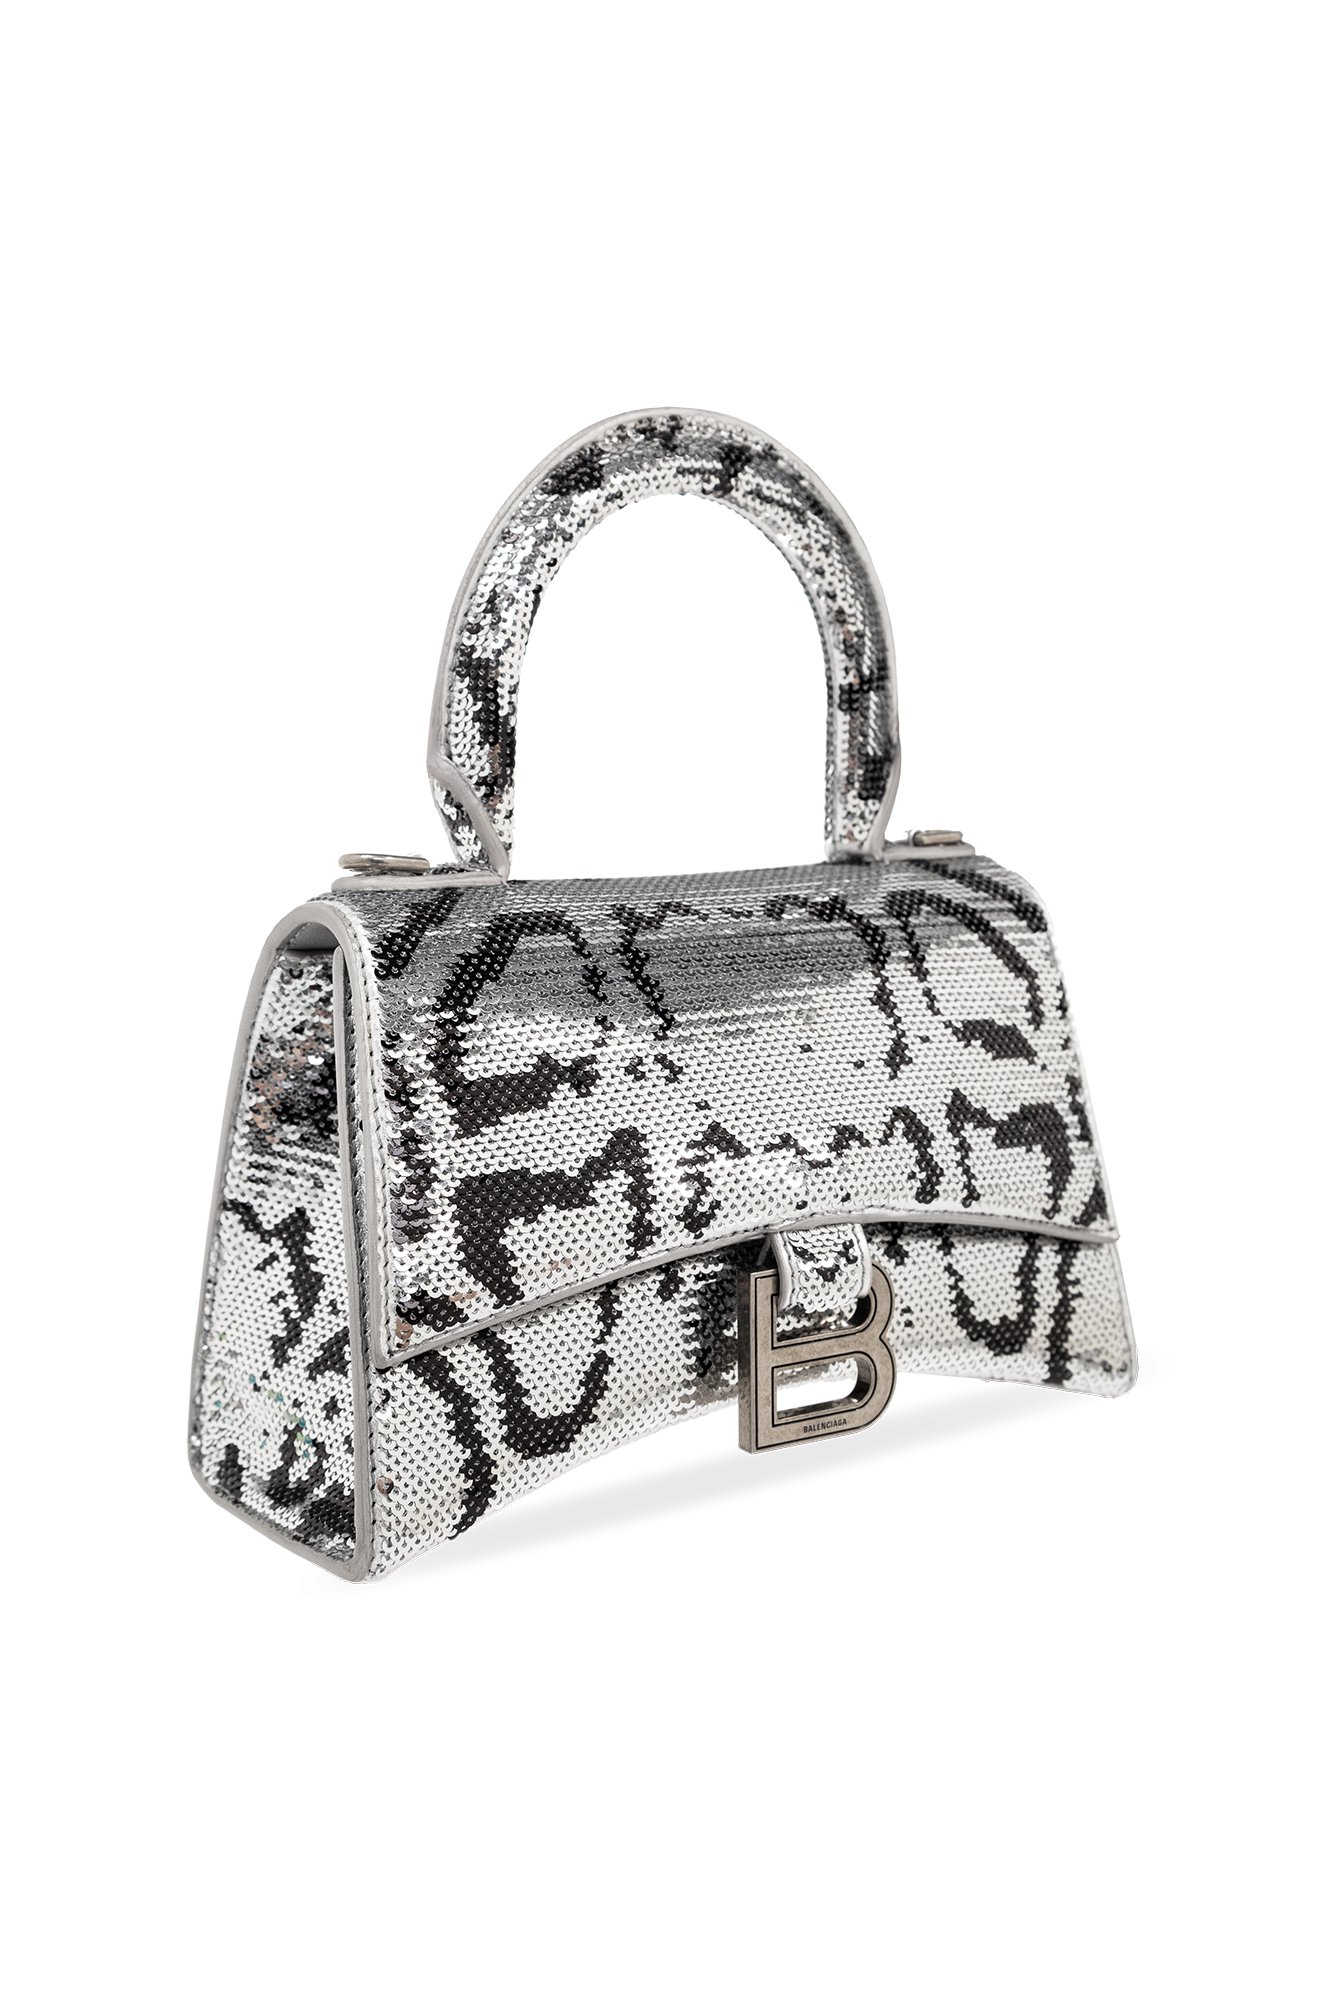 Silver 'Hourglass XS' shoulder bag Balenciaga - Vitkac TW